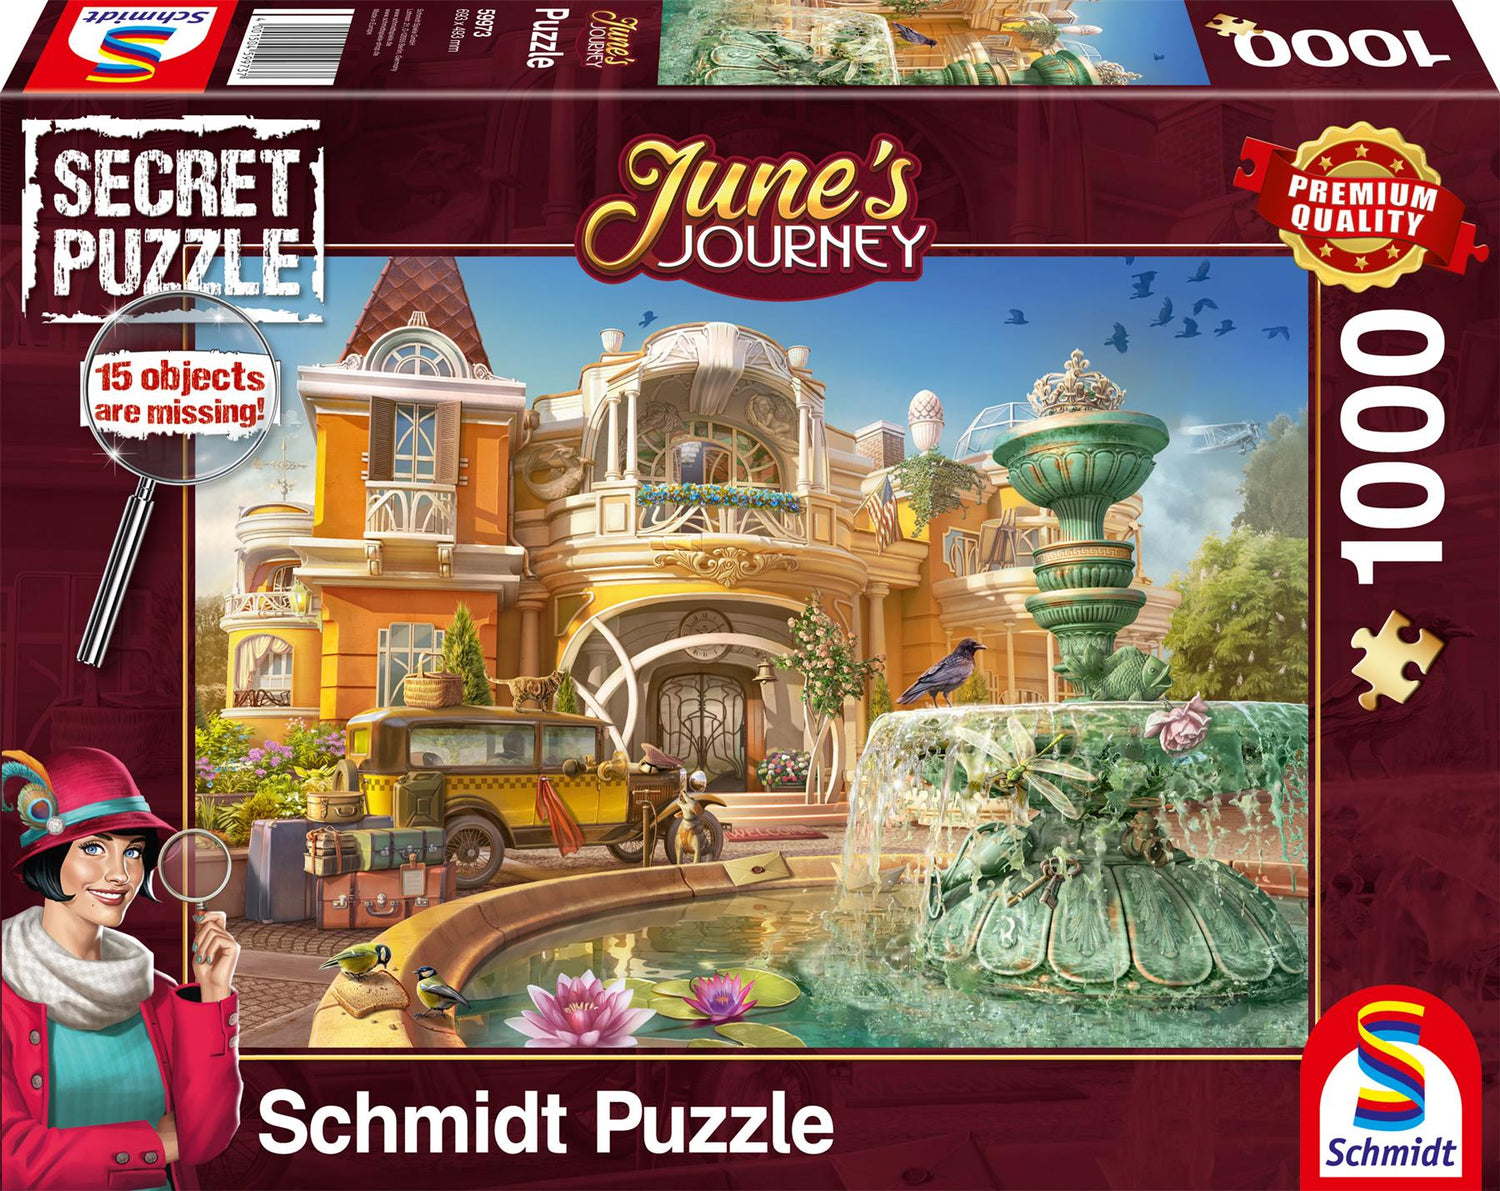 Schmidt Jigsaw Puzzles